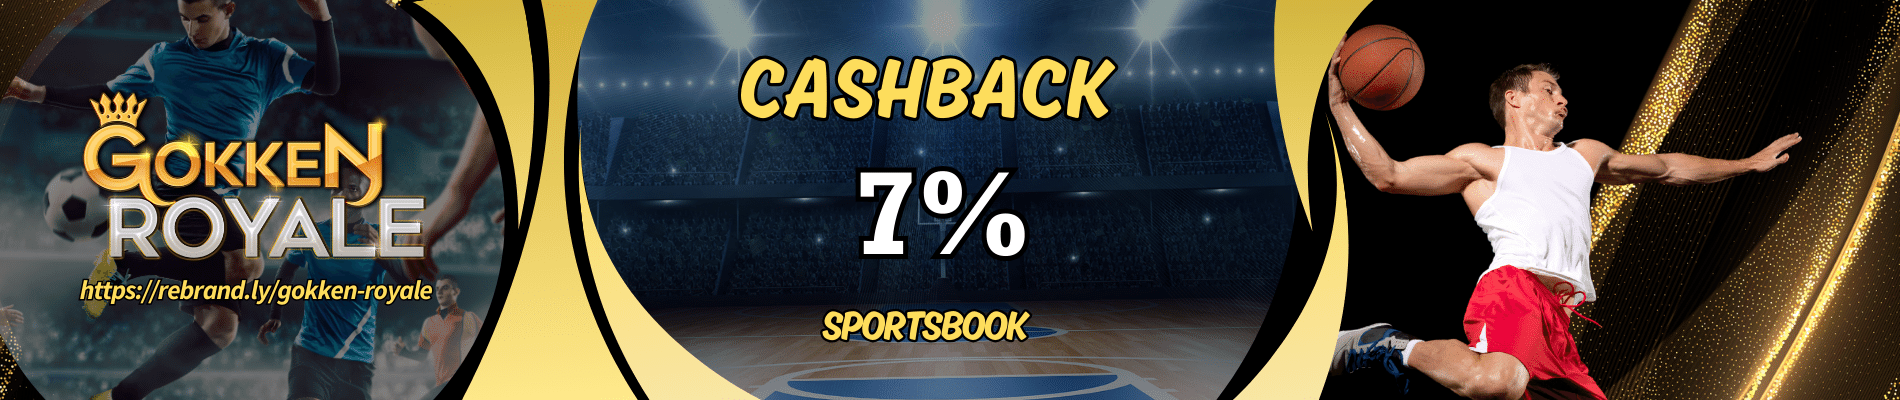 Bonus Casback Rebate 7% Sportsbook